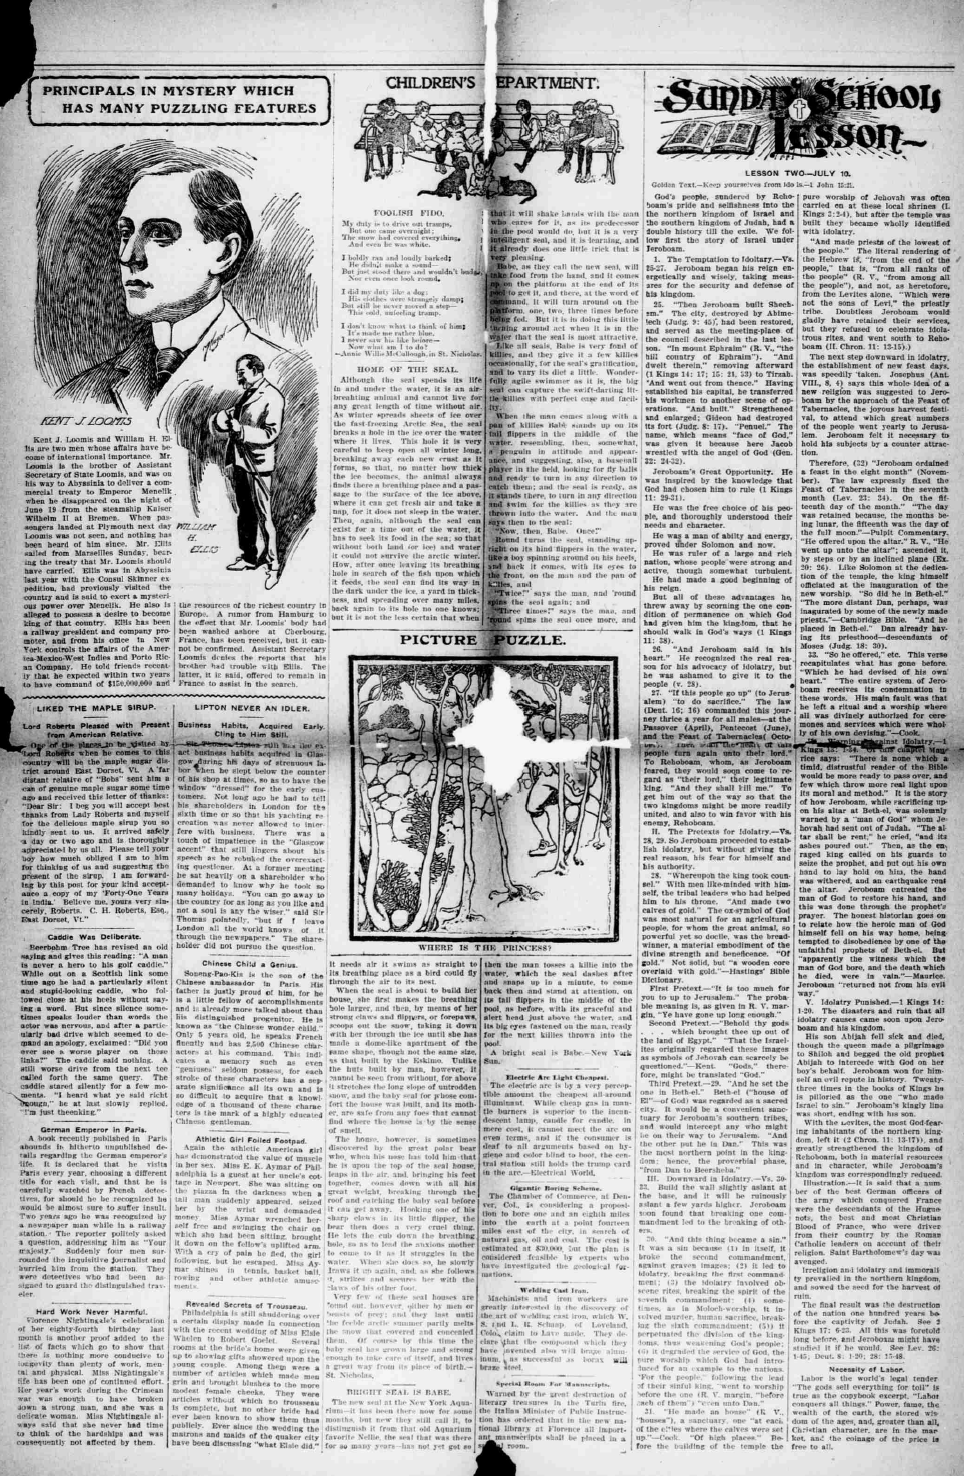 Palestine Daily Herald (TX) 9 July 1904